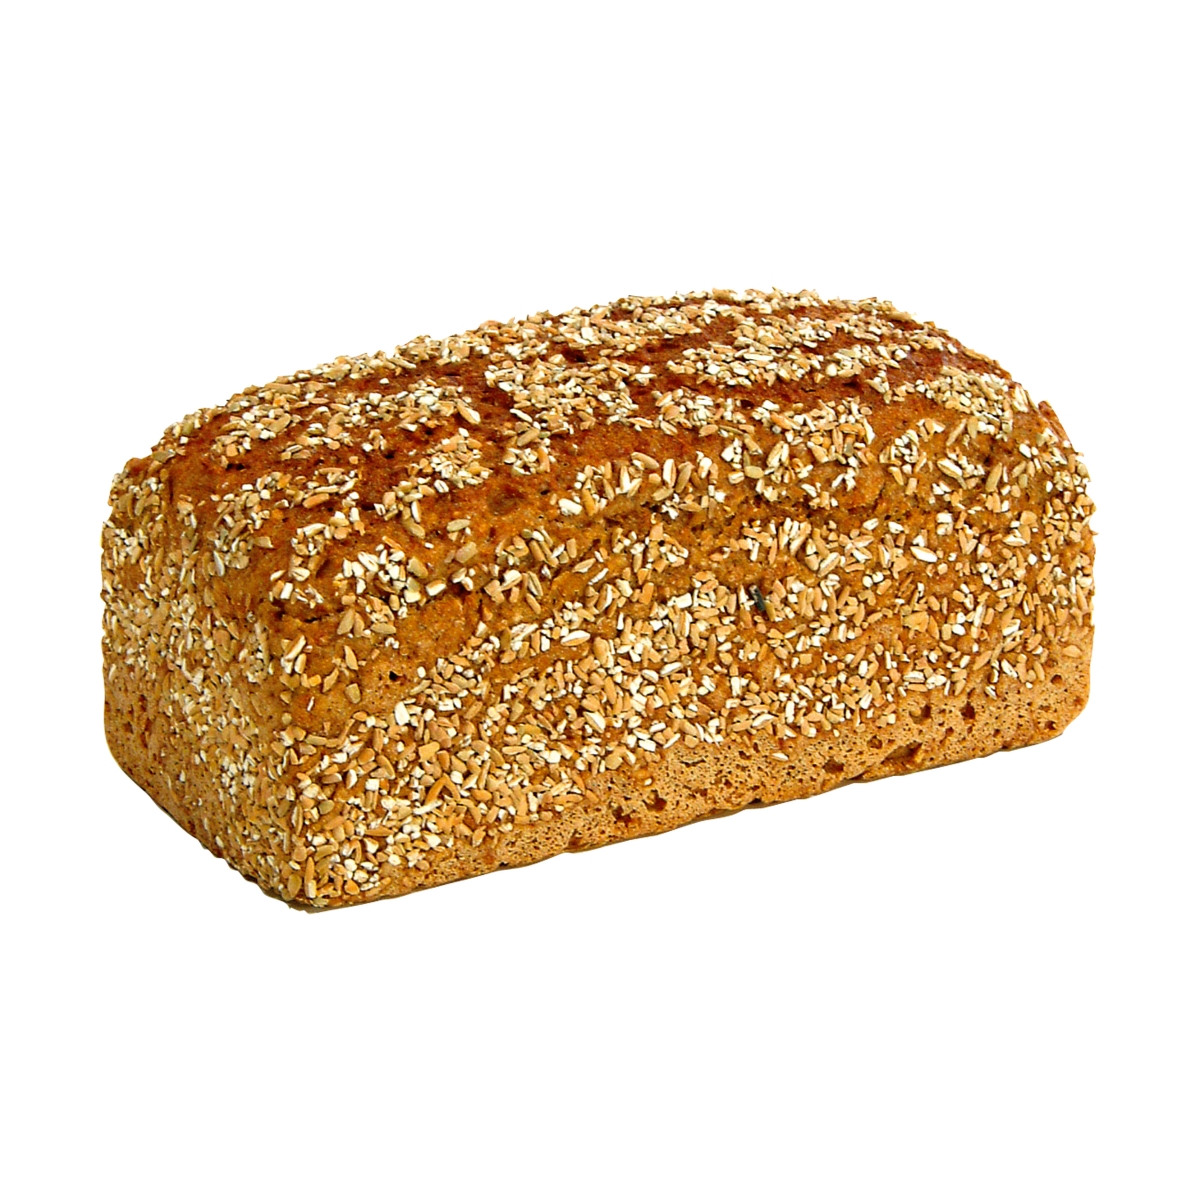 Roggen-Hafer-Brot - kräftiges Brot aus vollem Korn. Das gesunde ...